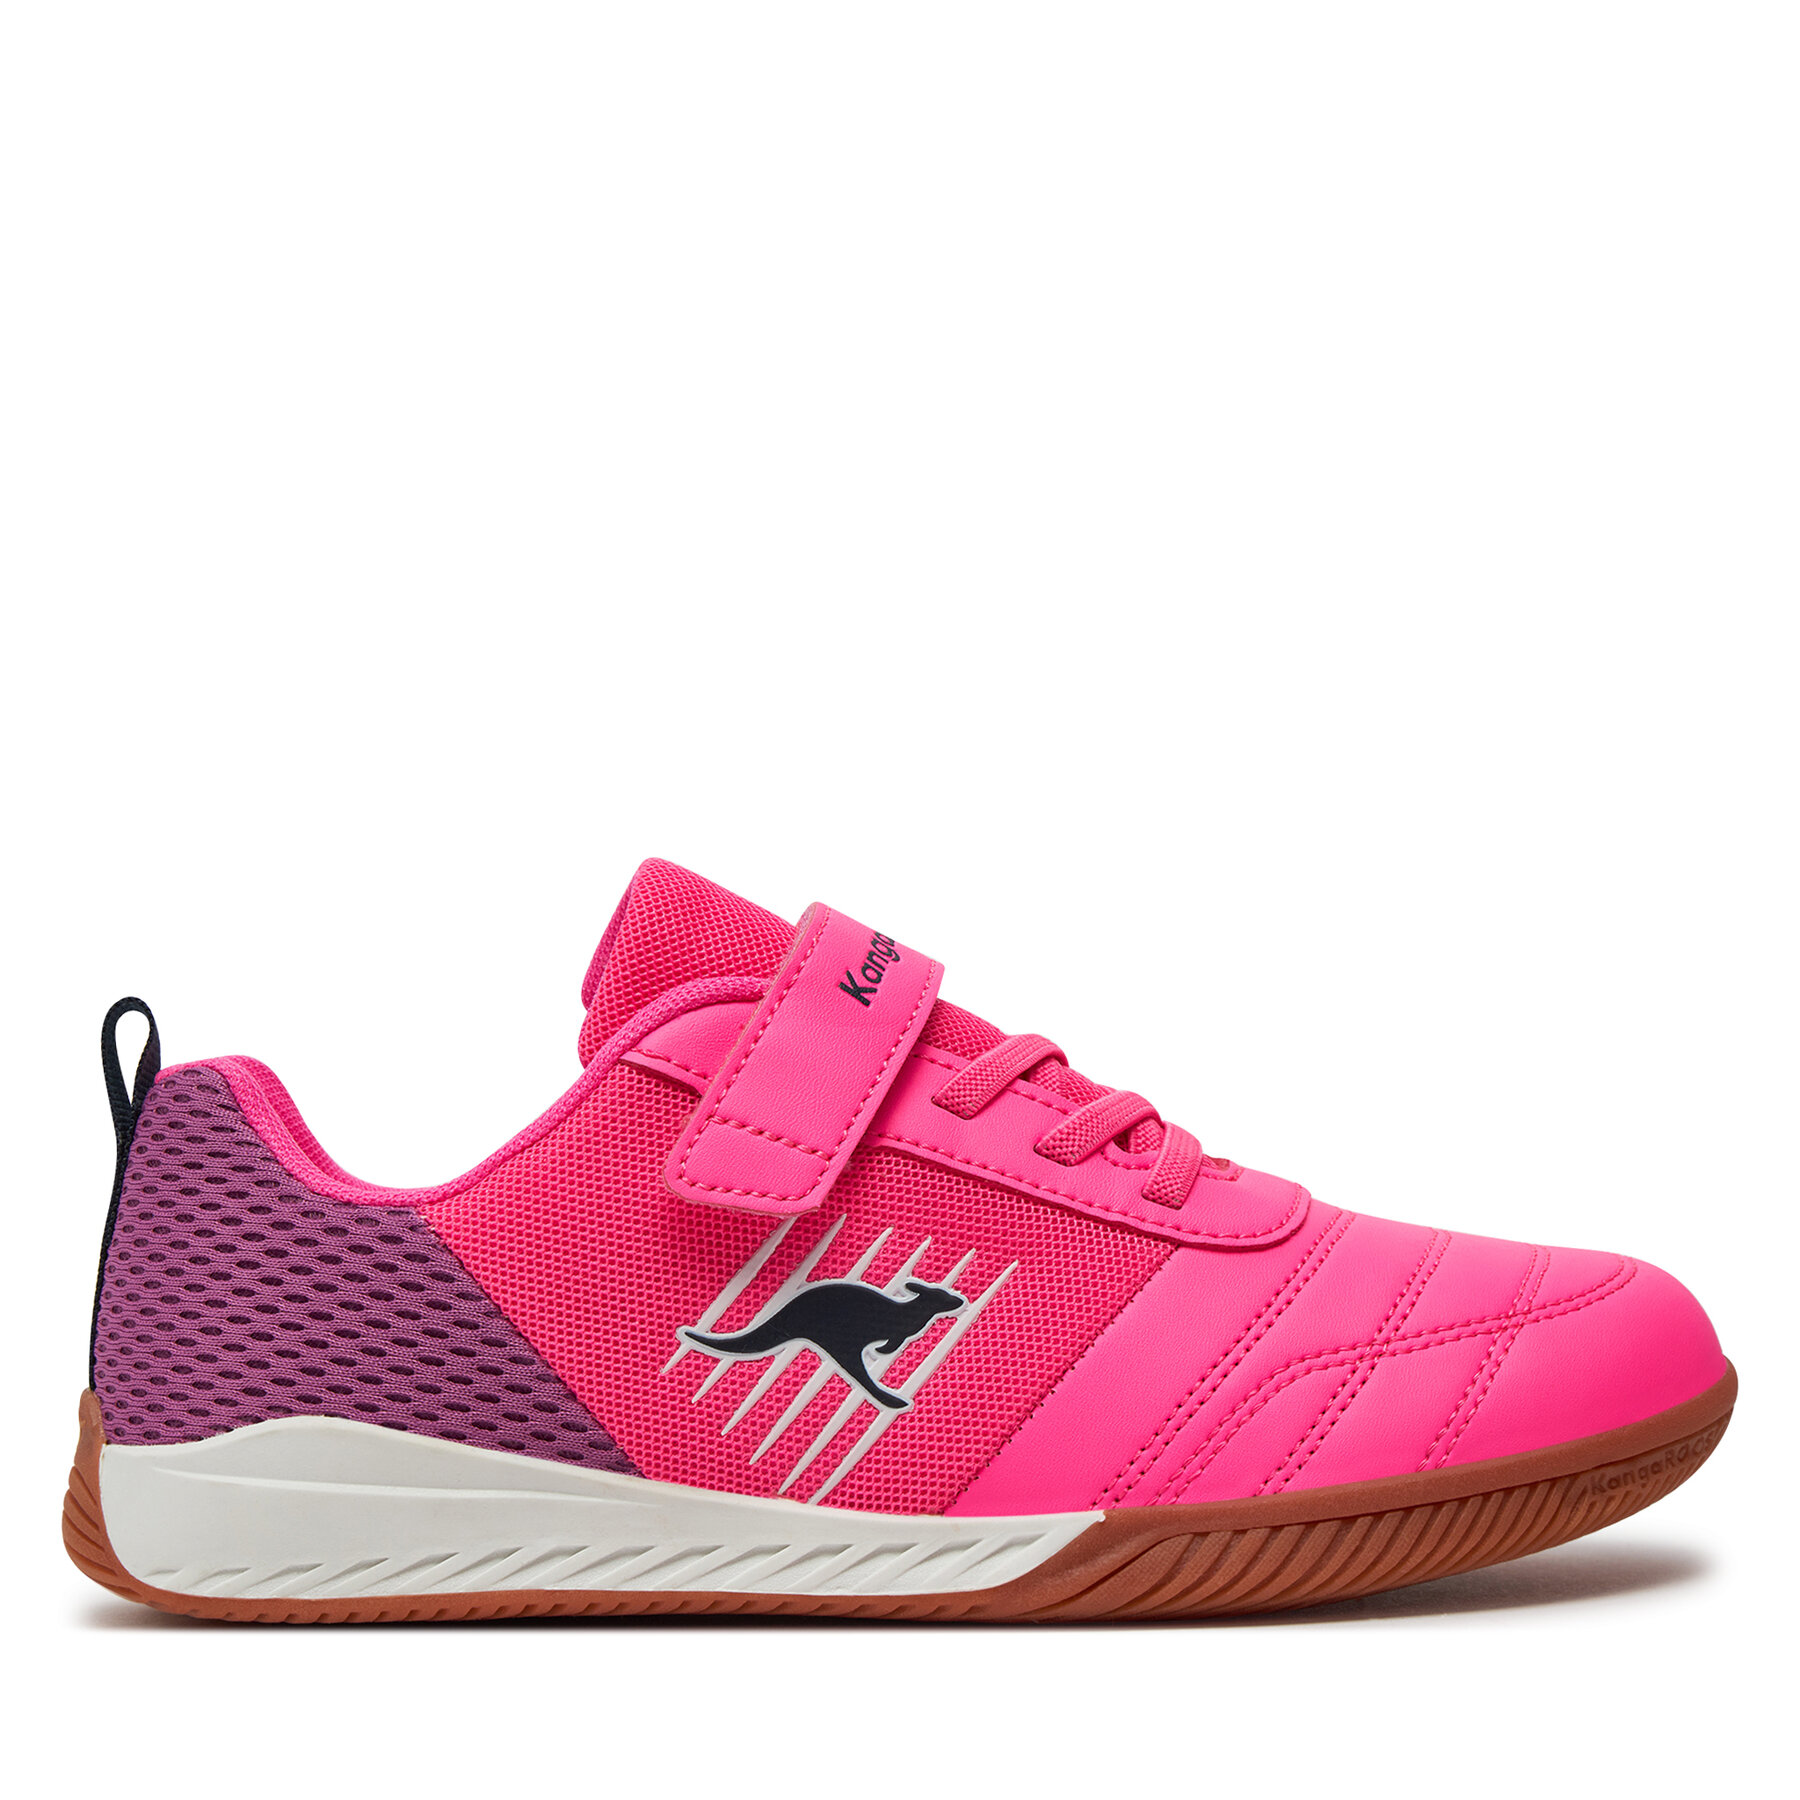 Schuhe KangaRoos Super Court Ev 18611 000 6211 D Neon Pink/Fuchsia von Kangaroos